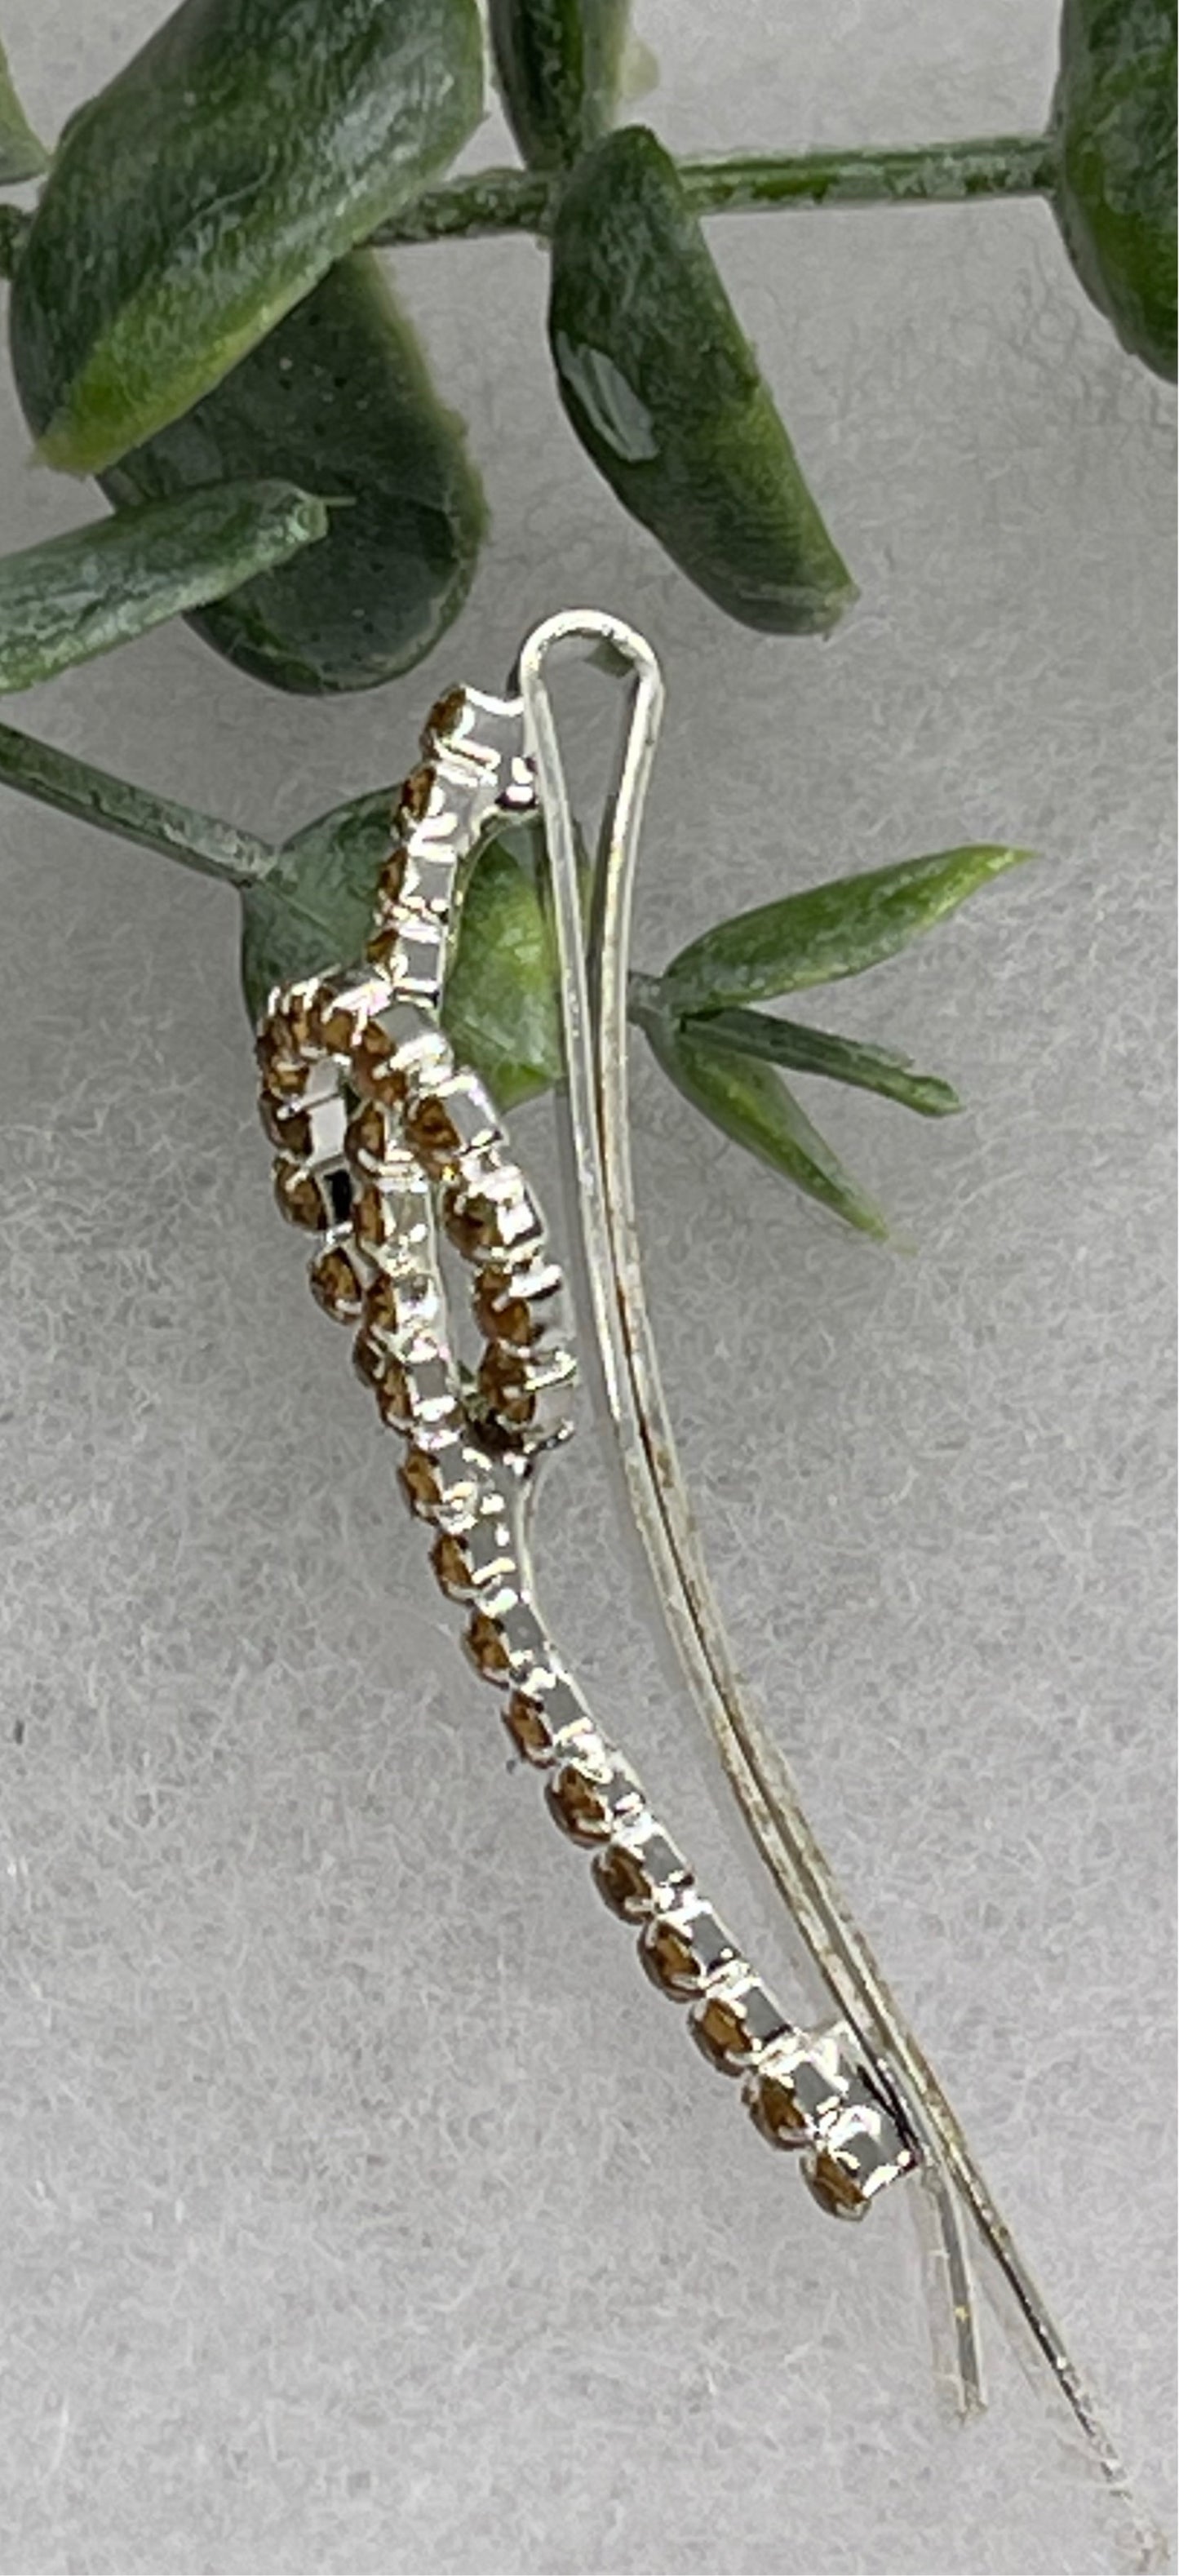 Gold Crystal Rhinestone hair pin silver tone approx 2.5” bridesmaid wedding formal princess accessory accessories